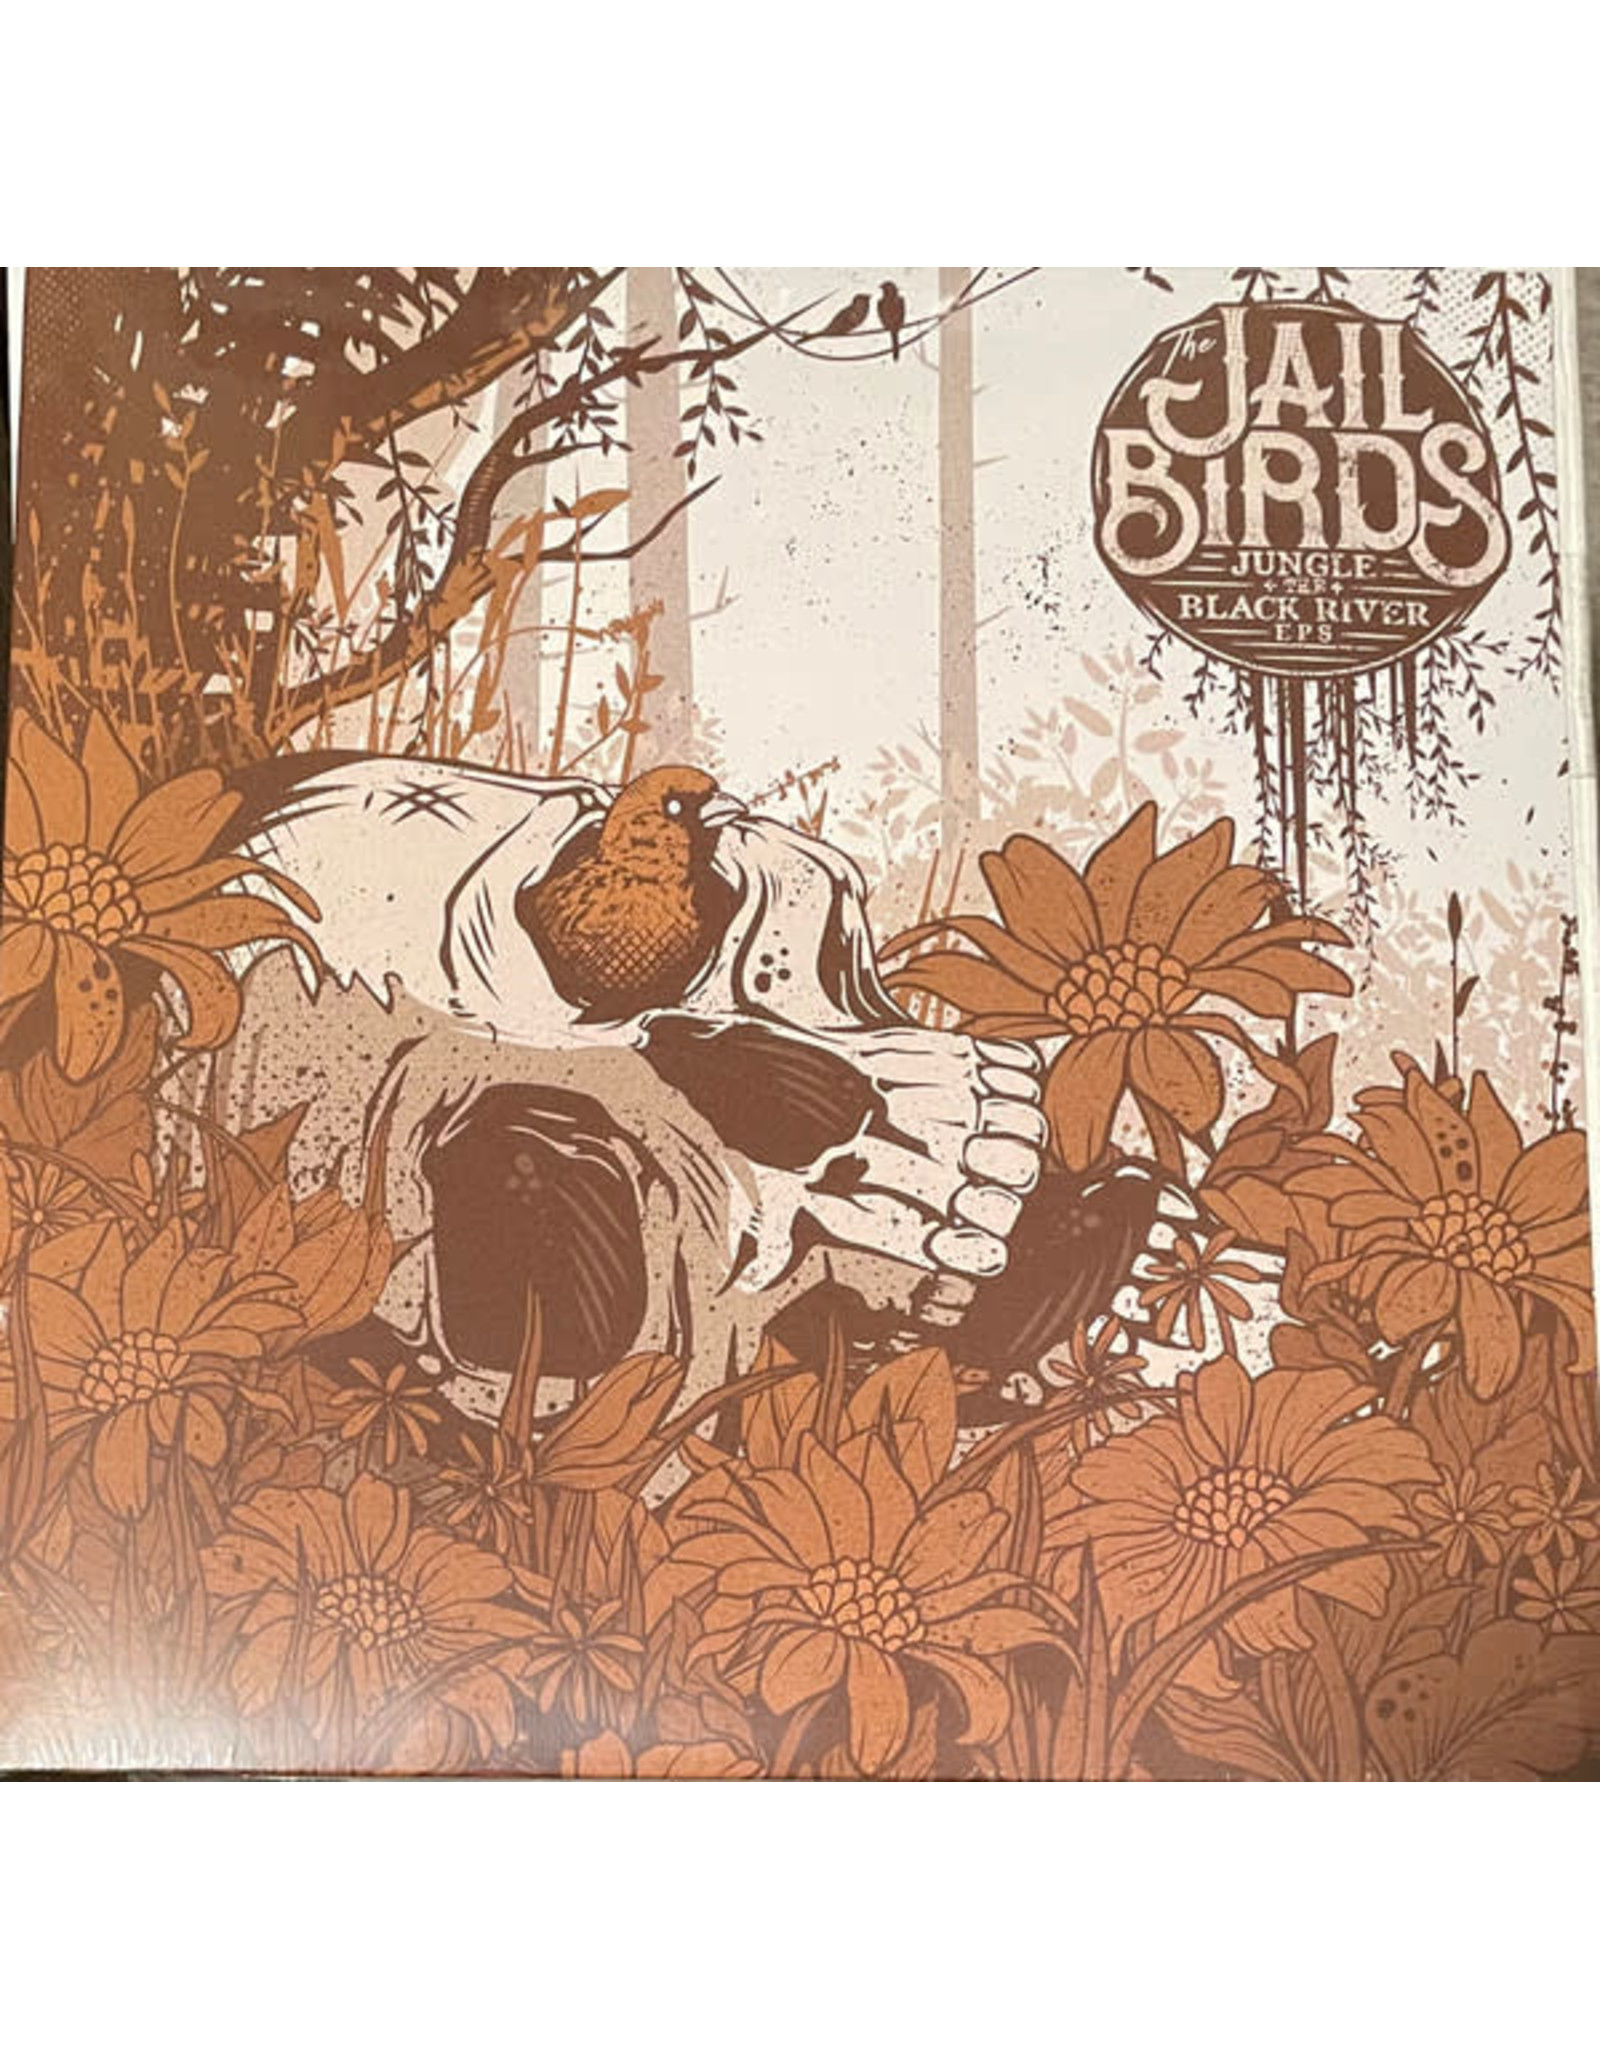 Jailbirds, The- Jungle the Black River EPs LP